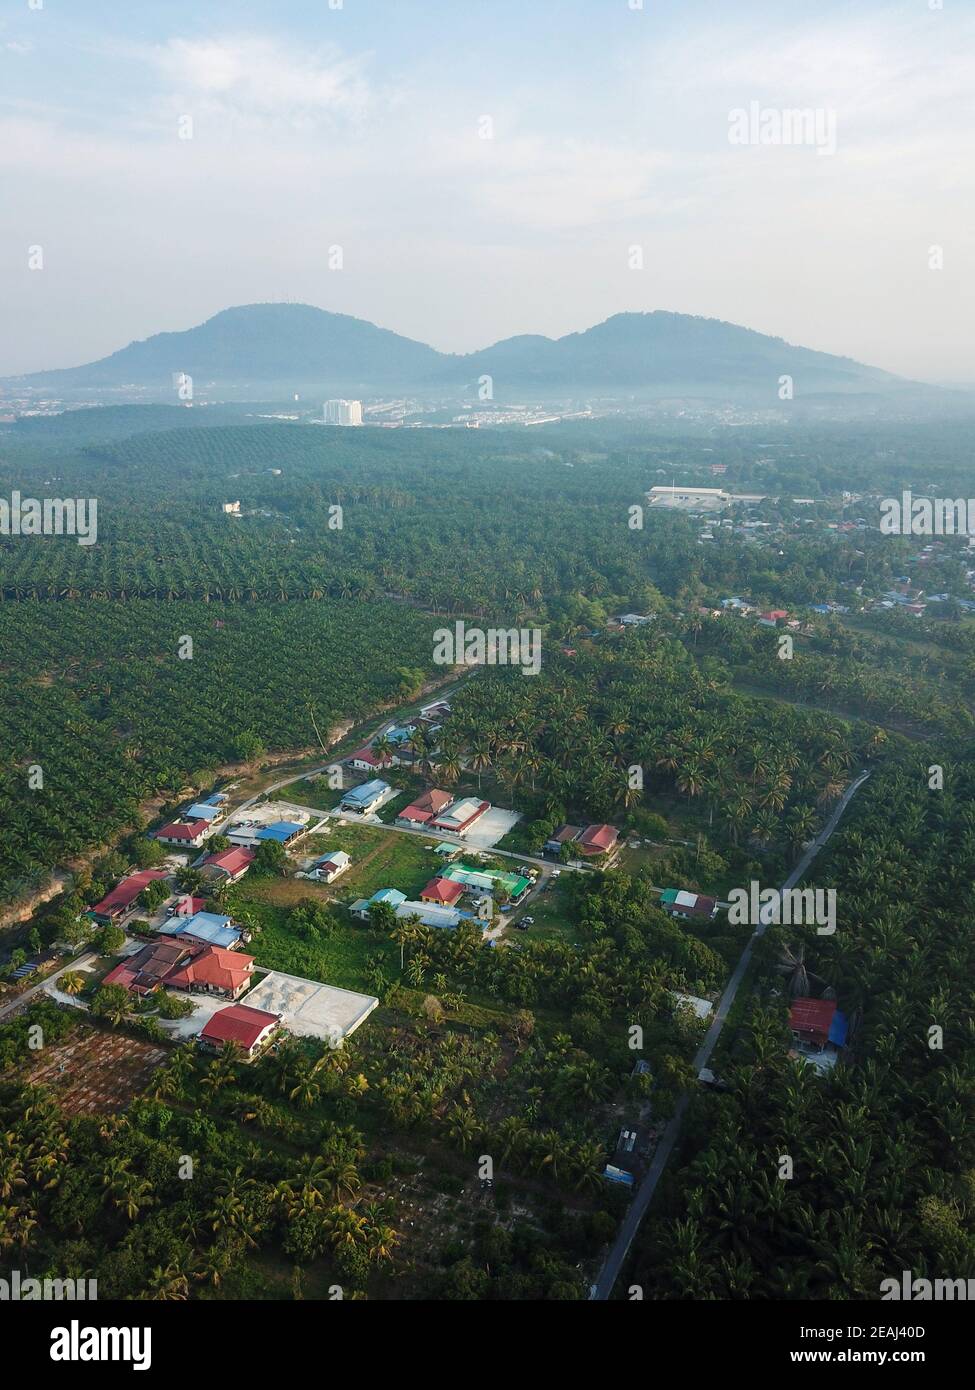 Oil palm plantation near Village. Stock Photo